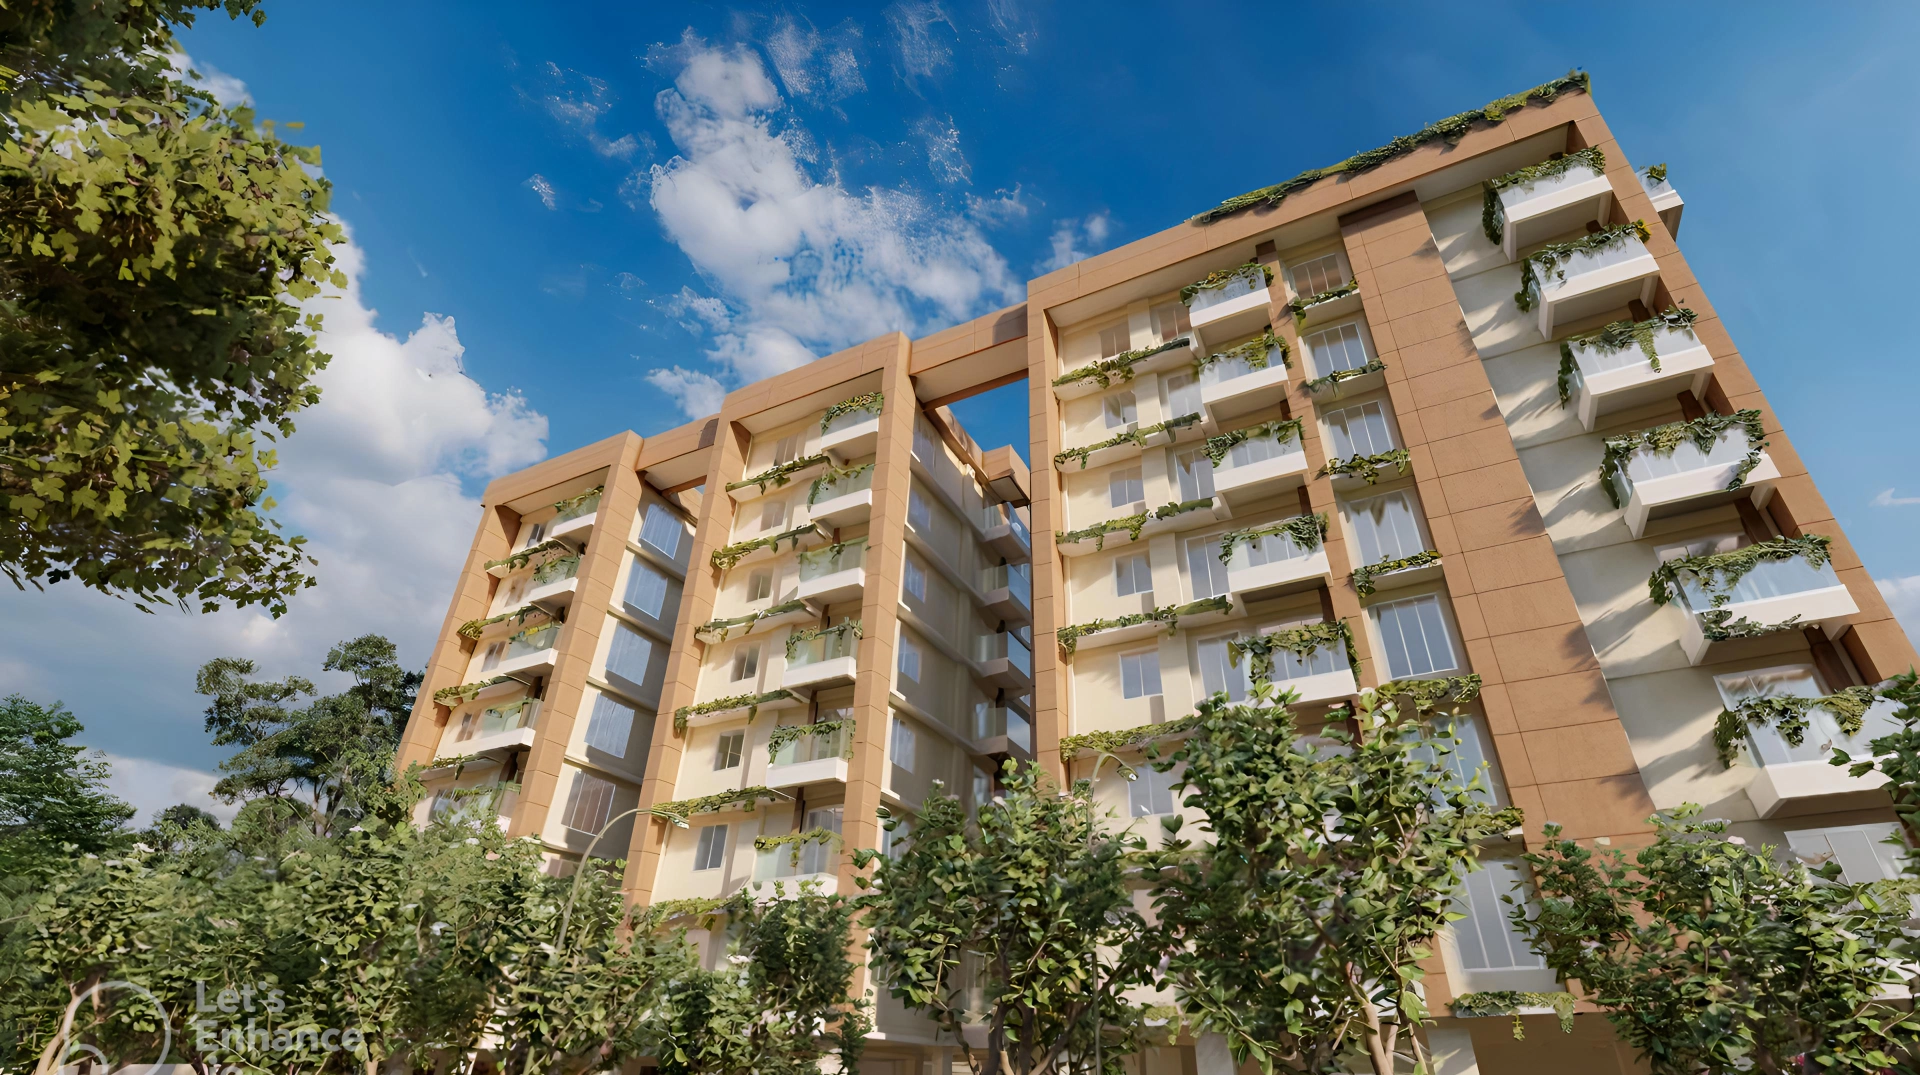 Ridhi Sidhi Towers presents 2/3/4 BHK luxury apartments in Fatasil, Ambari, Guwahati.